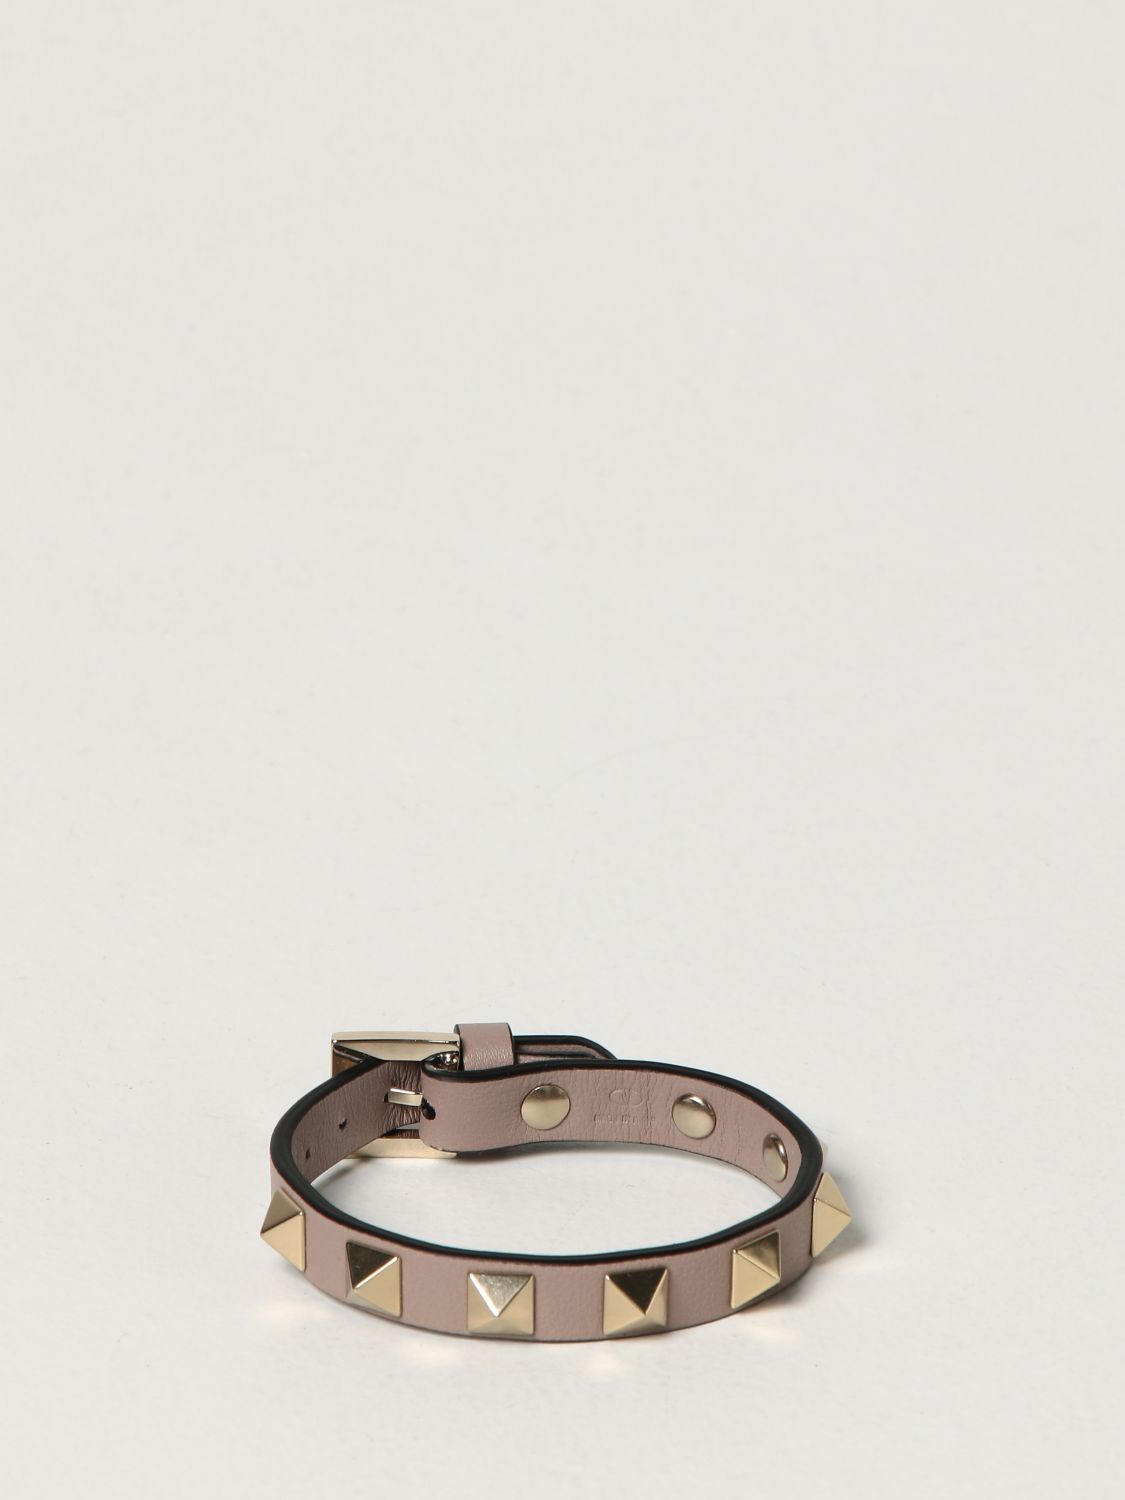 VALENTINO GARAVANI: leather bracelet with studs - Blush Pink | Valentino Garavani jewel XW2J0255VIT online on